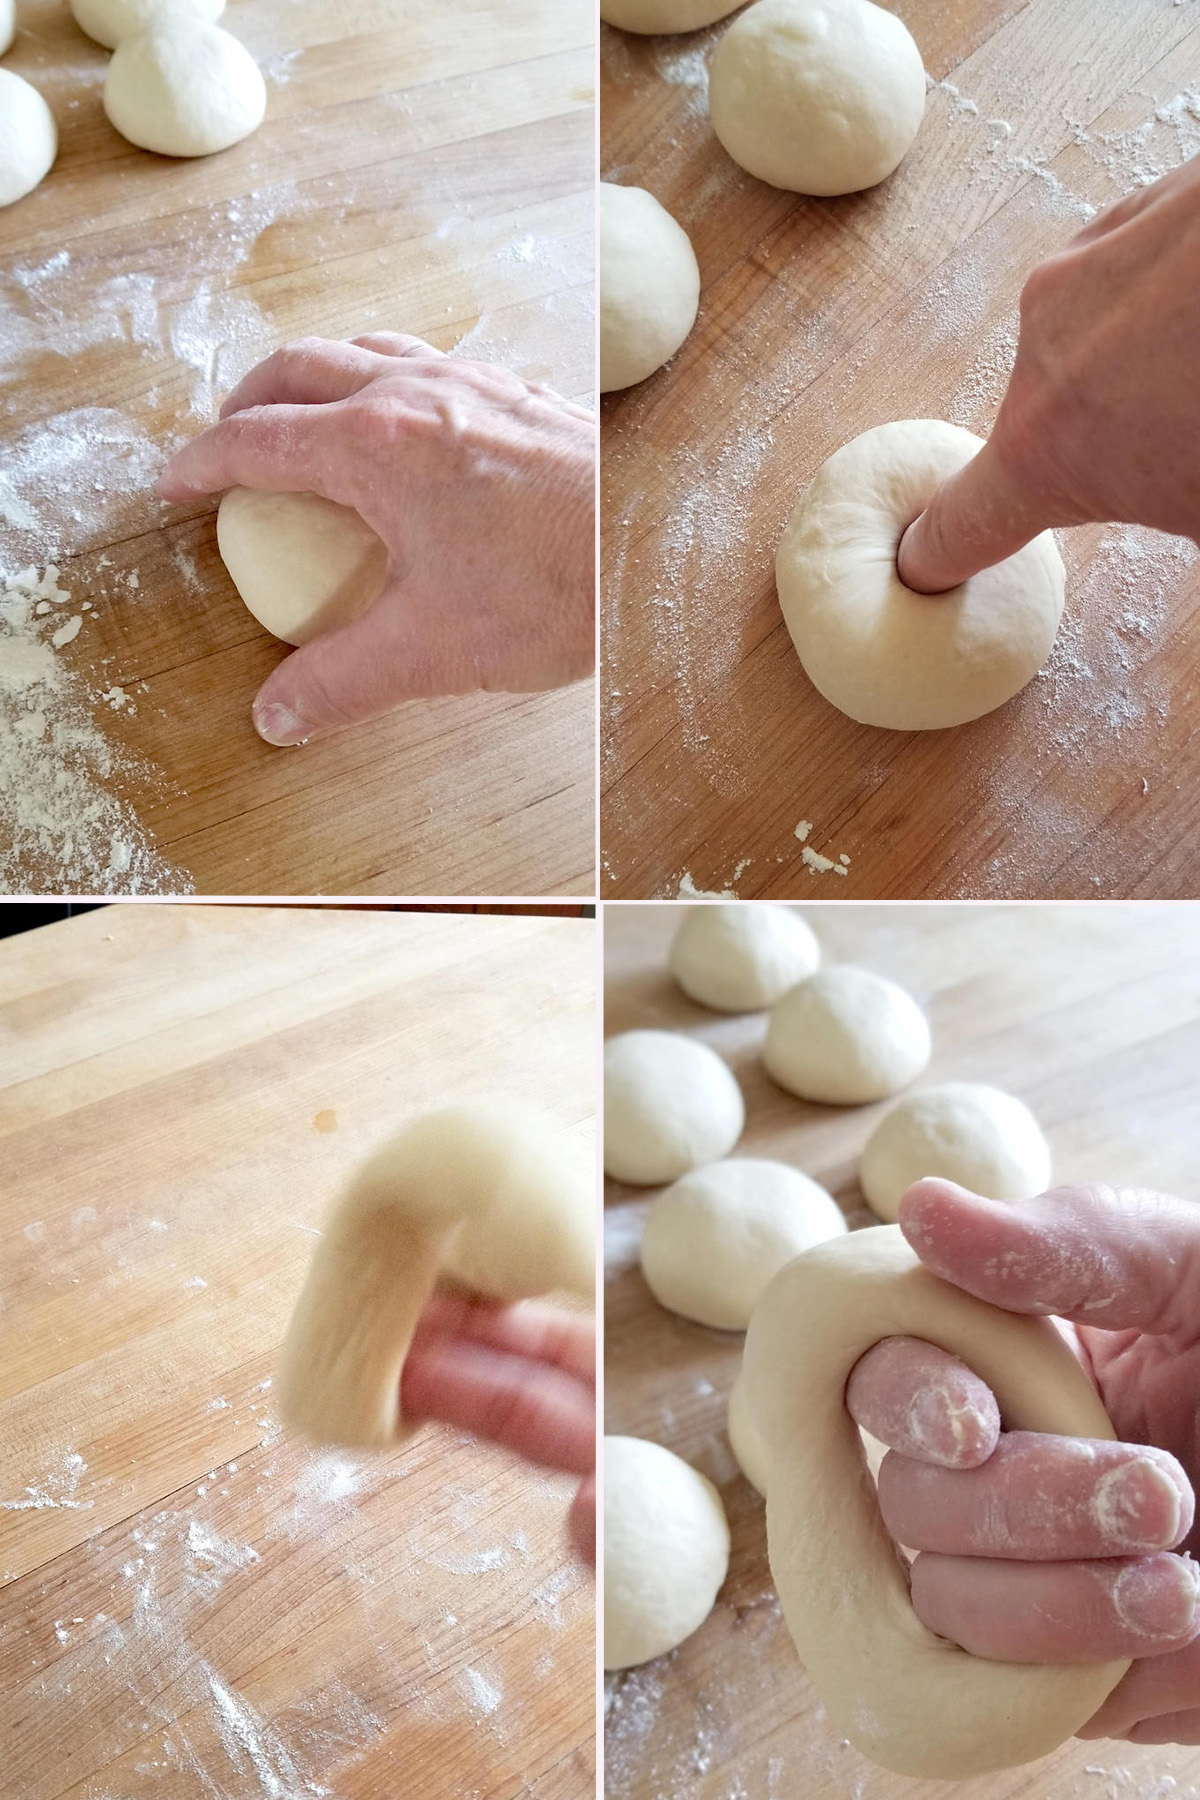 shaping dough ball into a bagel.